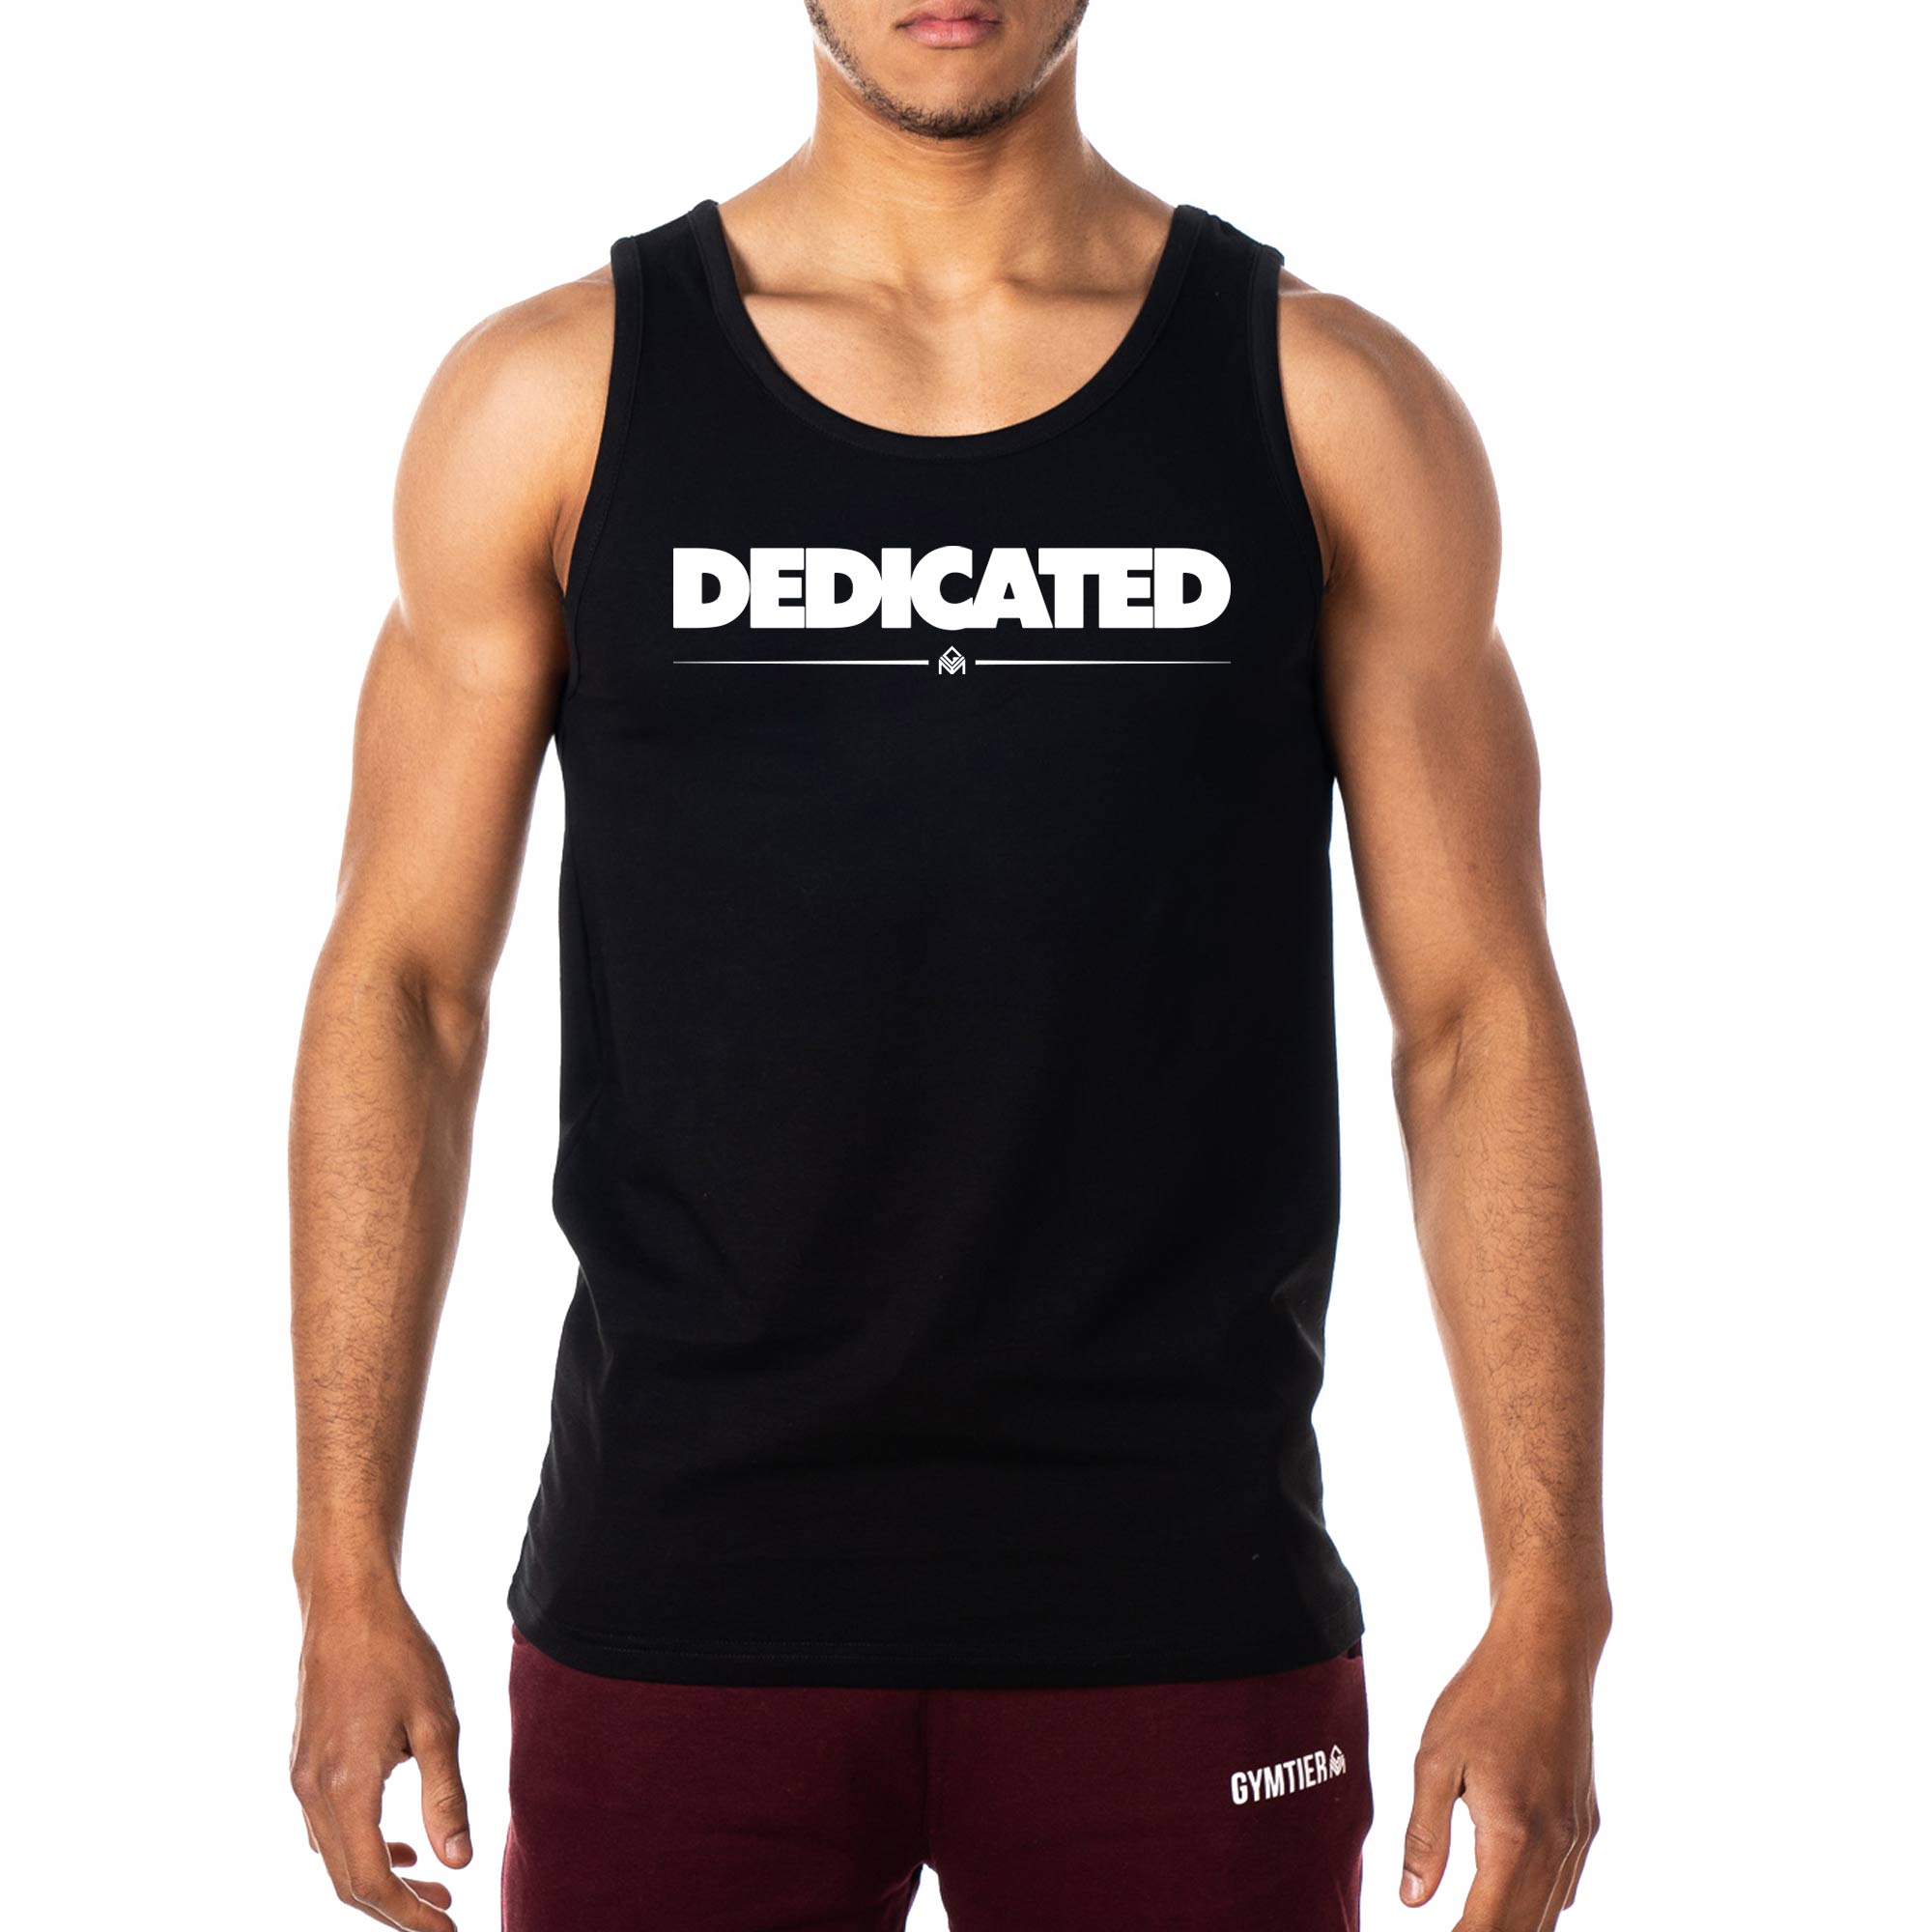 Dedicated Gym Vest